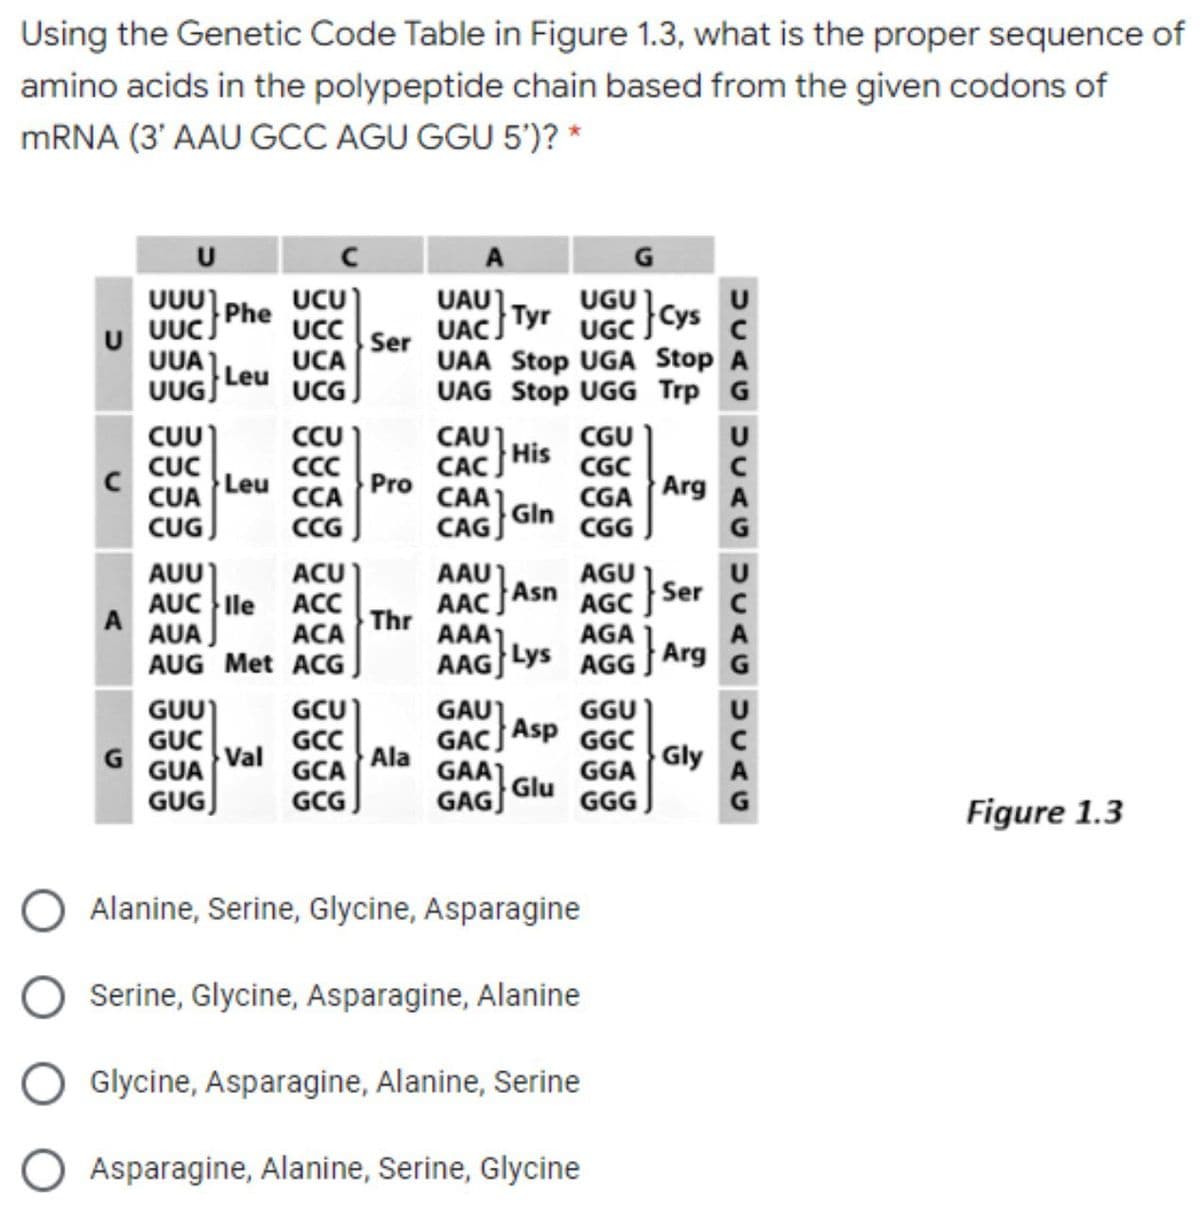 Using the Genetic Code Table in Figure 1.3, what is the proper sequence of
amino acids in the polypeptide chain based from the given codons of
MRNA (3' AAU GCC AGU GGU 5')? *
U
UUU Phe UCU)
UC
UCA
UCG
UAU]
UAC Tyr
UAA Stop UGA Stop A
UAG Stop UGG Trp G
UGU
U UUC)
UGC Cys
Ser
UUA
Leu
UUGJ
CU)
CCU
CAU1
CGU
His
CUC
CAC
CAA
CGC
CC
Leu
CCA
Pro
Arg
CUA
CGA
A
Gin
CUG)
CG
CAG
CGG
G
AUU)
ACU)
AGU
AAU1
Asn
AAC,
Thr
AAA1
U
AGC }Ser č
A
G
AUC lle ACC
A
AUA J
ACA
AGA
AUG Met ACG,
AAG}Lys AGG Arg
GGU
GUU)
GUC
Val
GCU)
GCC
GCA
GCG J
GAU1
Asp
GACI
Ala
GGC
GGA
GGG )
G
GUA
Gly
GAA1
GAG)
A
Glu
GUG)
G
Figure 1.3
Alanine, Serine, Glycine, Asparagine
Serine, Glycine, Asparagine, Alanine
Glycine, Asparagine, Alanine, Serine
Asparagine, Alanine, Serine, Glycine
